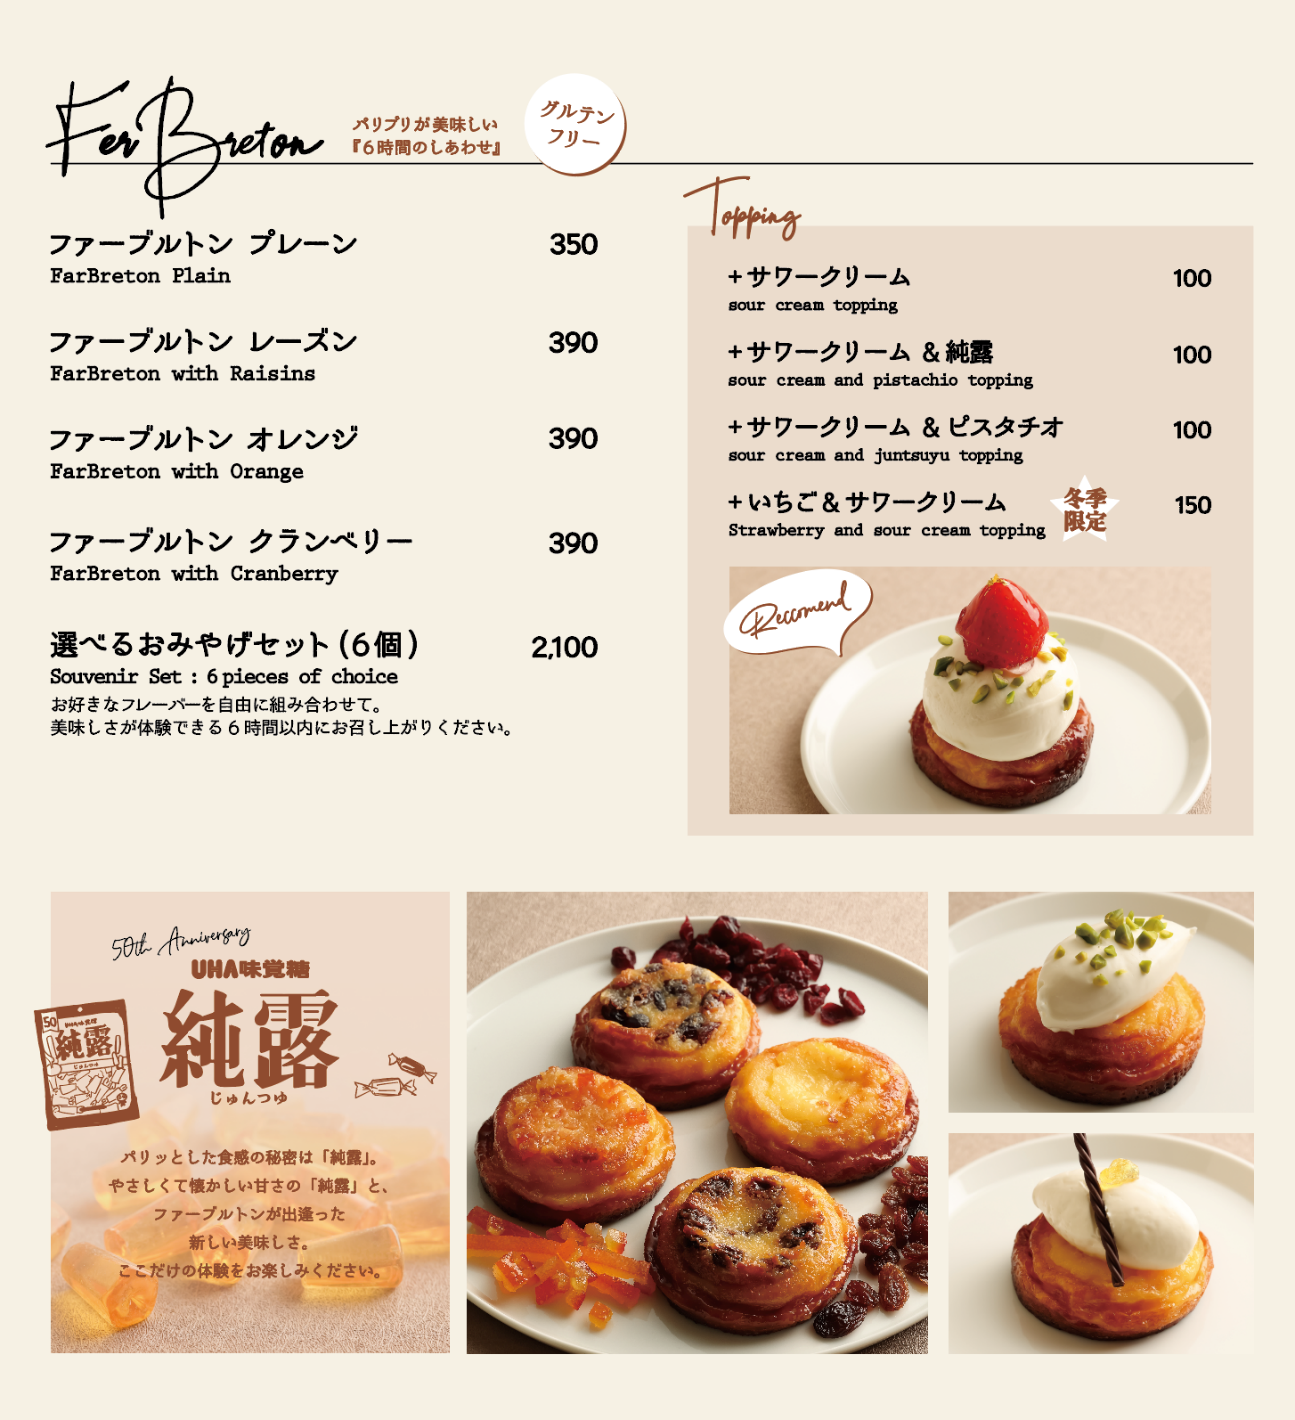 UHA味覚糖のキャンディ「純露」とのコラボレーションスイーツを提供する『神戸ファーブルトン』が、1月11日新宿にオープンのサブ画像6